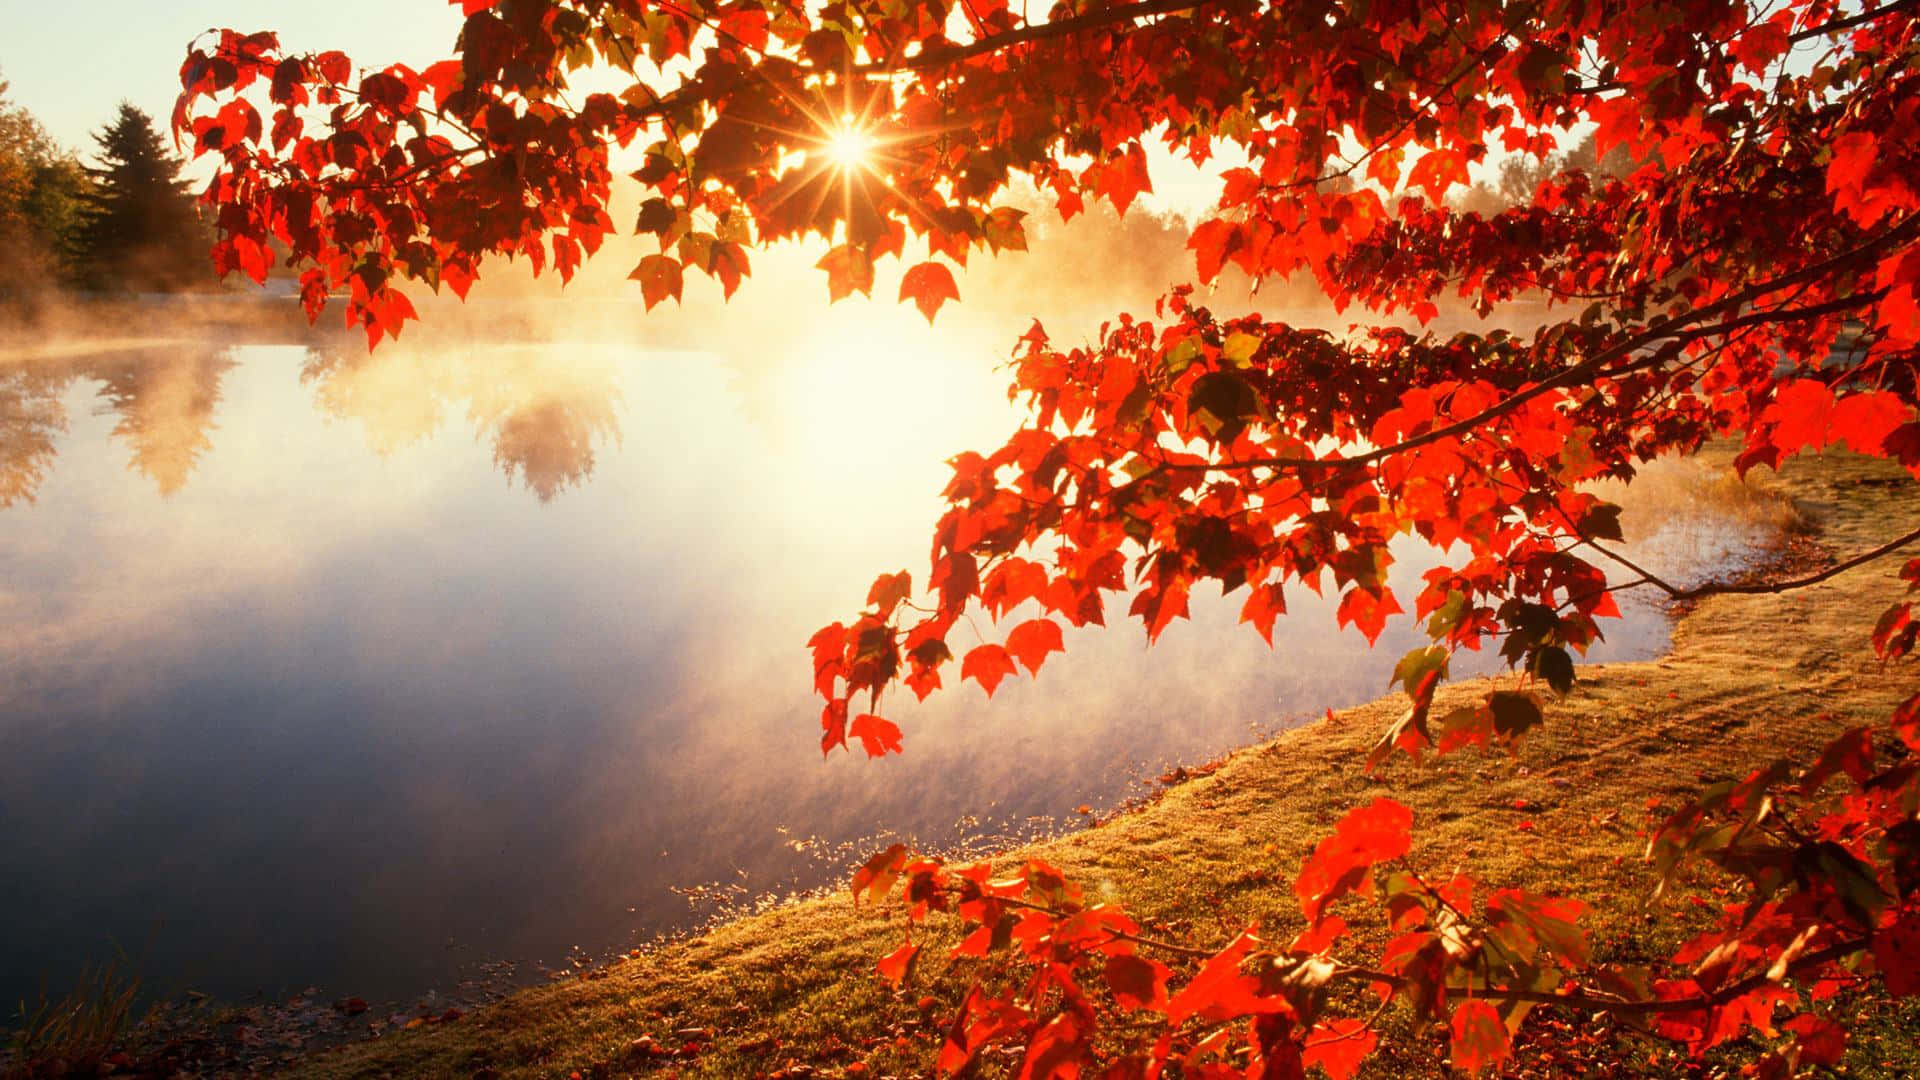 Enchanting Autumn Forest Wallpaper